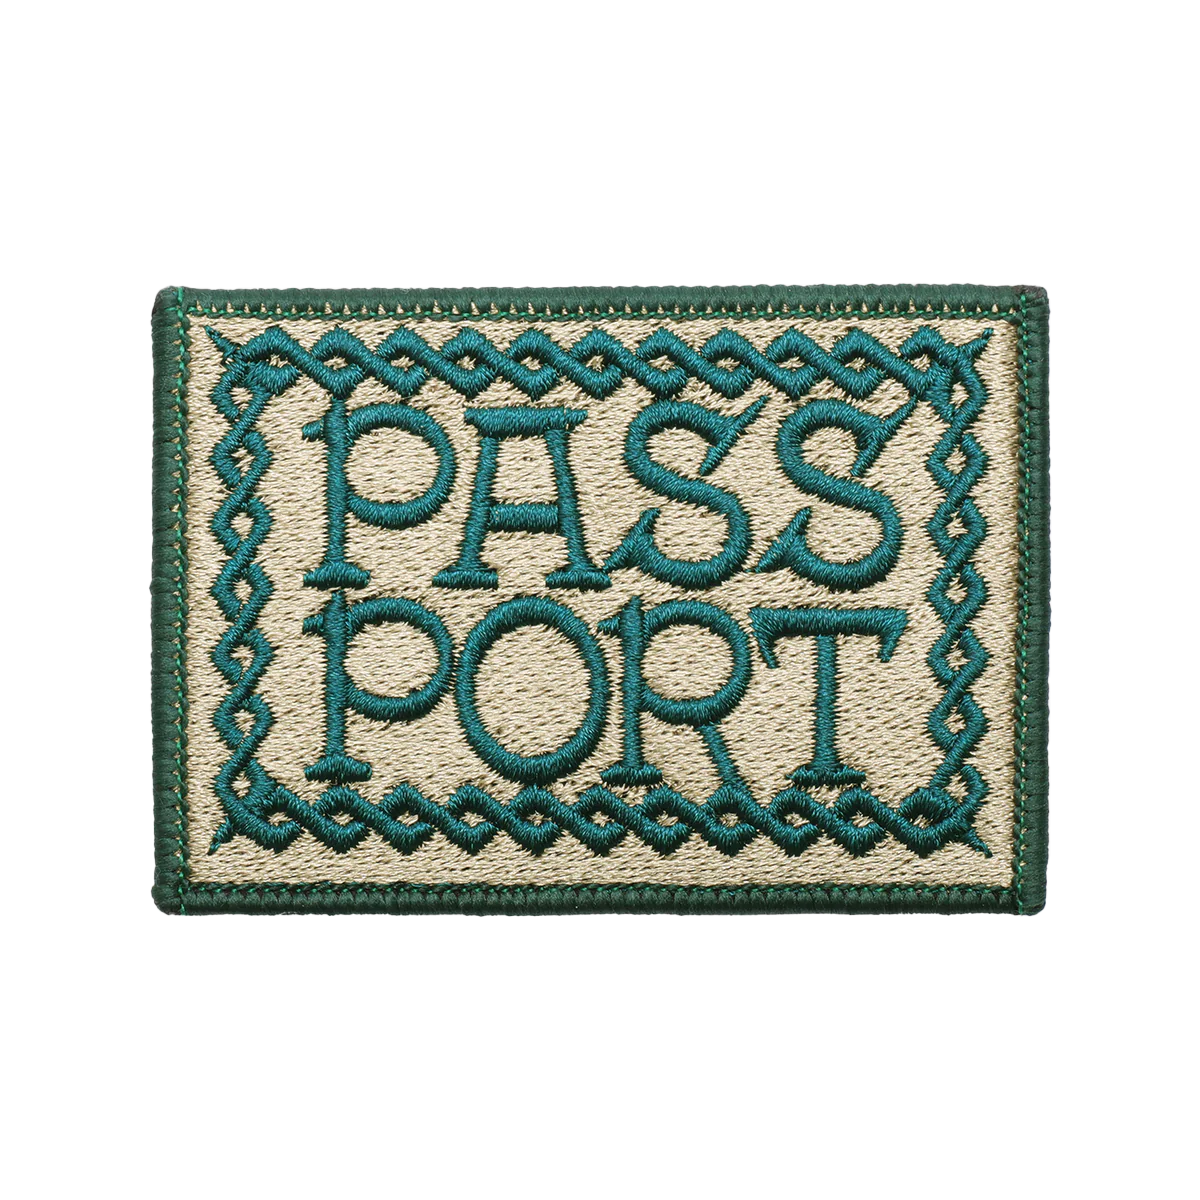 Passport Invasive Logo Embroidered Patch